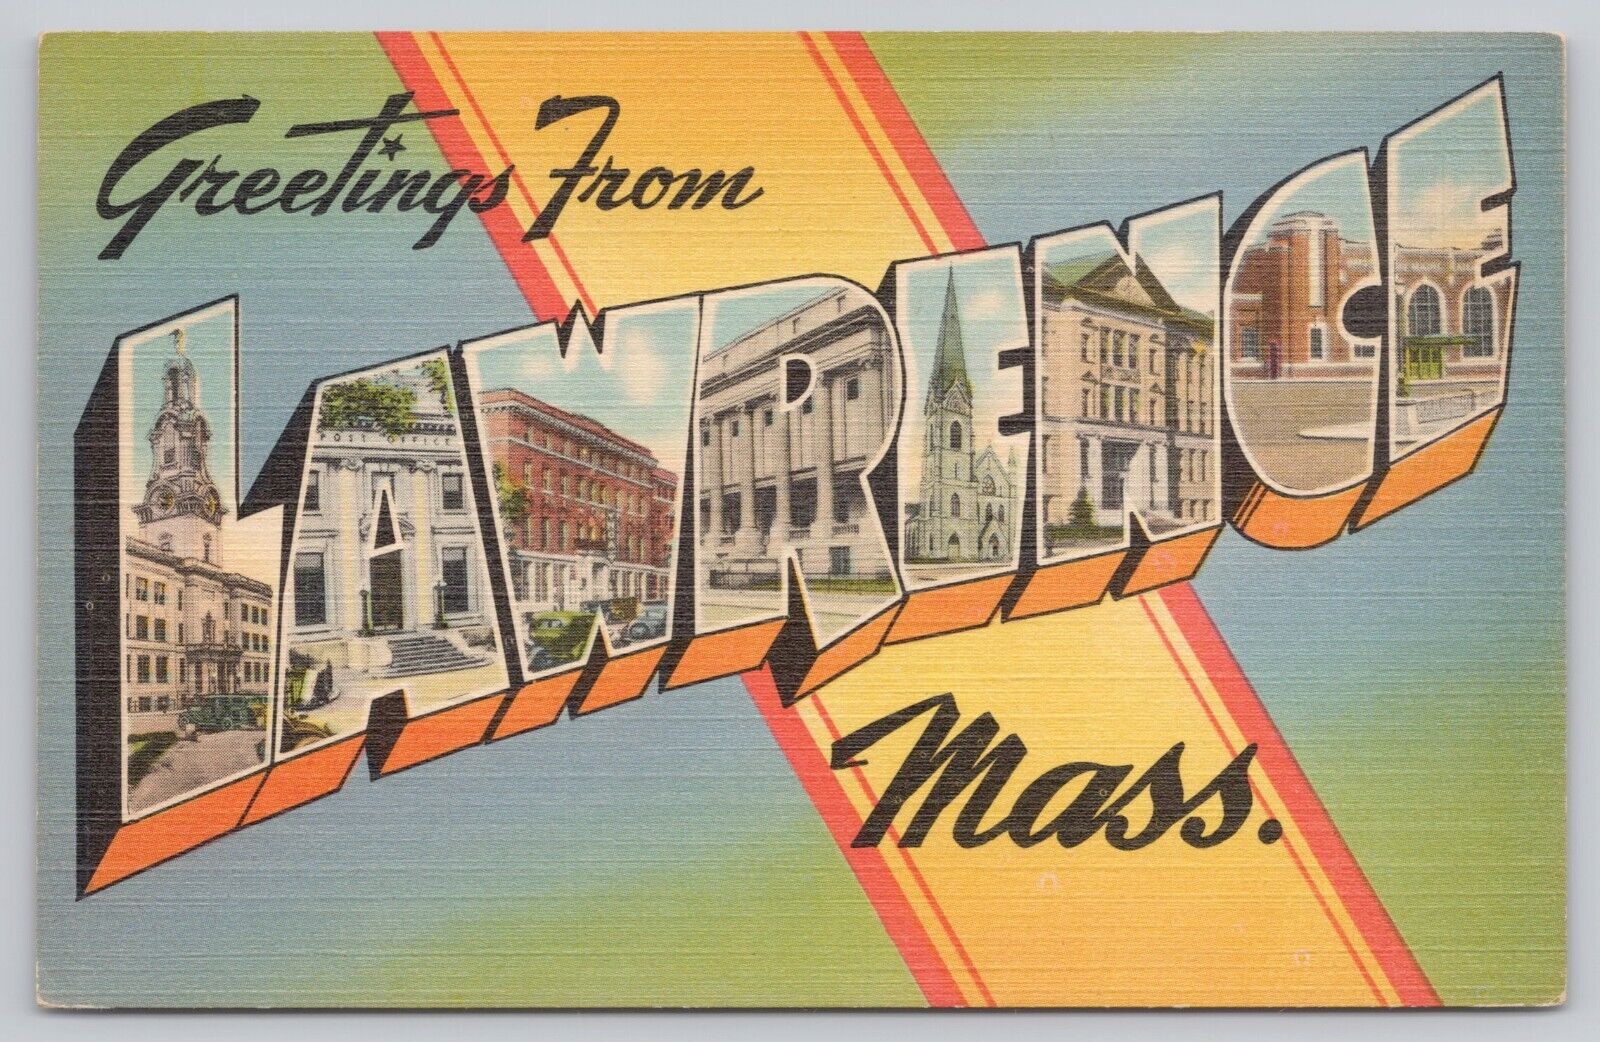 Lawrence Massachusetts, Large Letter Greetings, Vintage Postcard